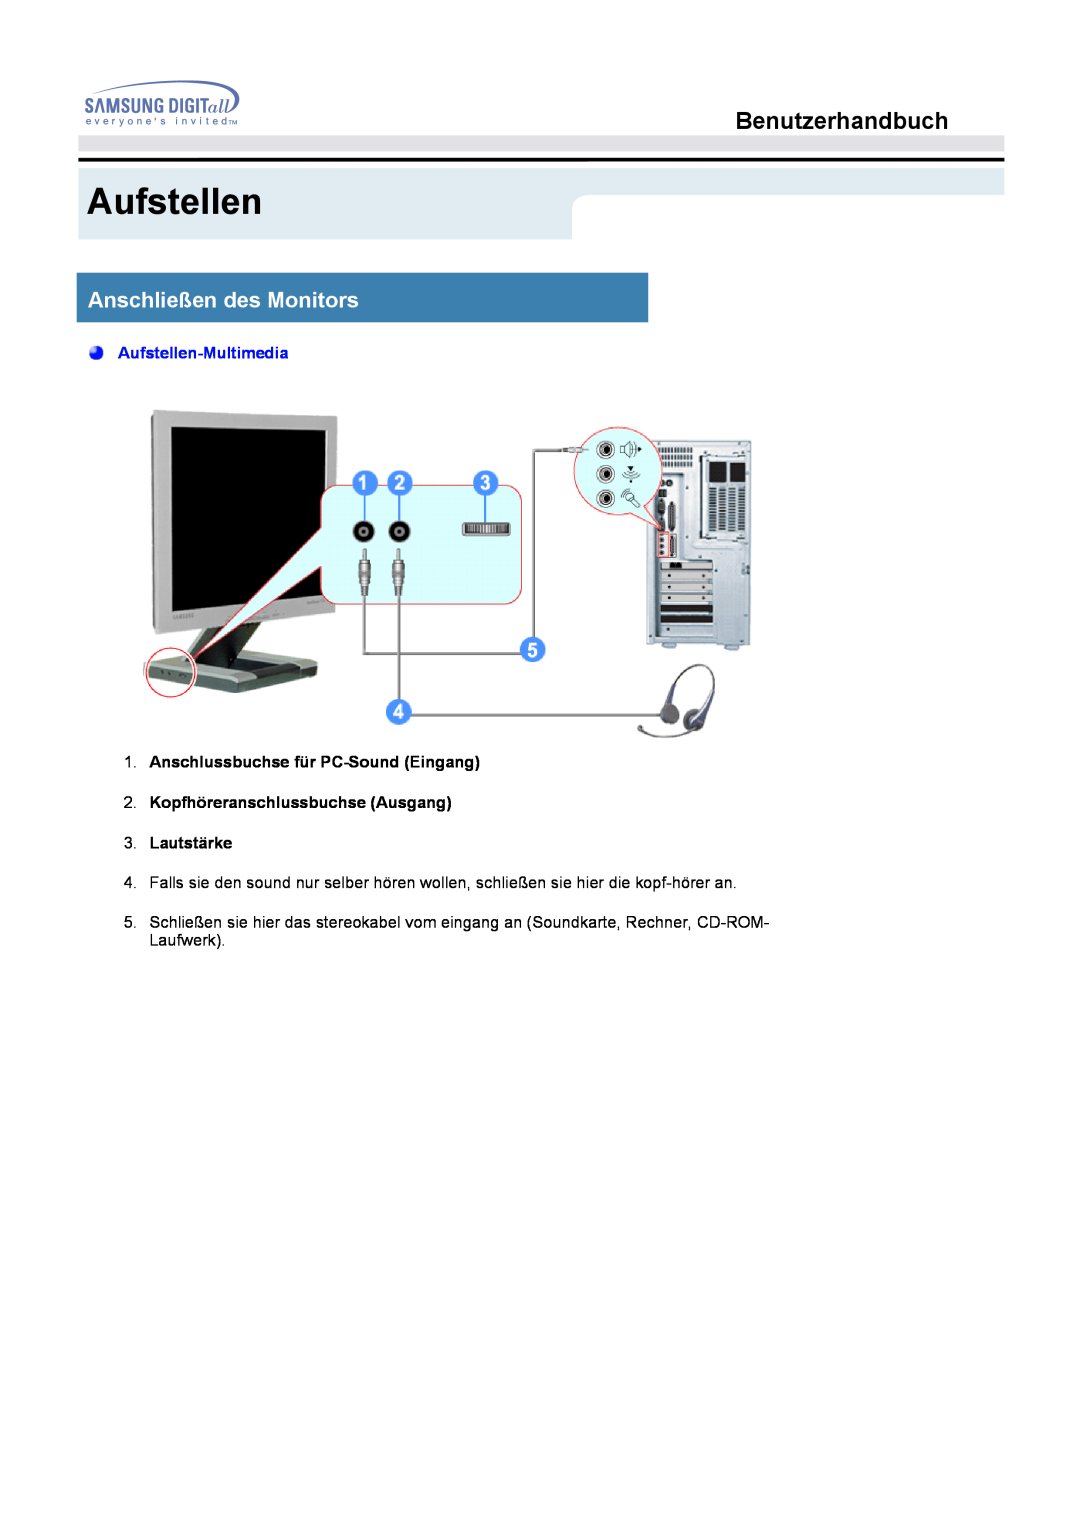 Samsung MO17PSZS/EDC, MO17ESZSZ/EDC, MO17ESZS/EDC Anschließen des Monitors, Benutzerhandbuch, Aufstellen-Multimedia 